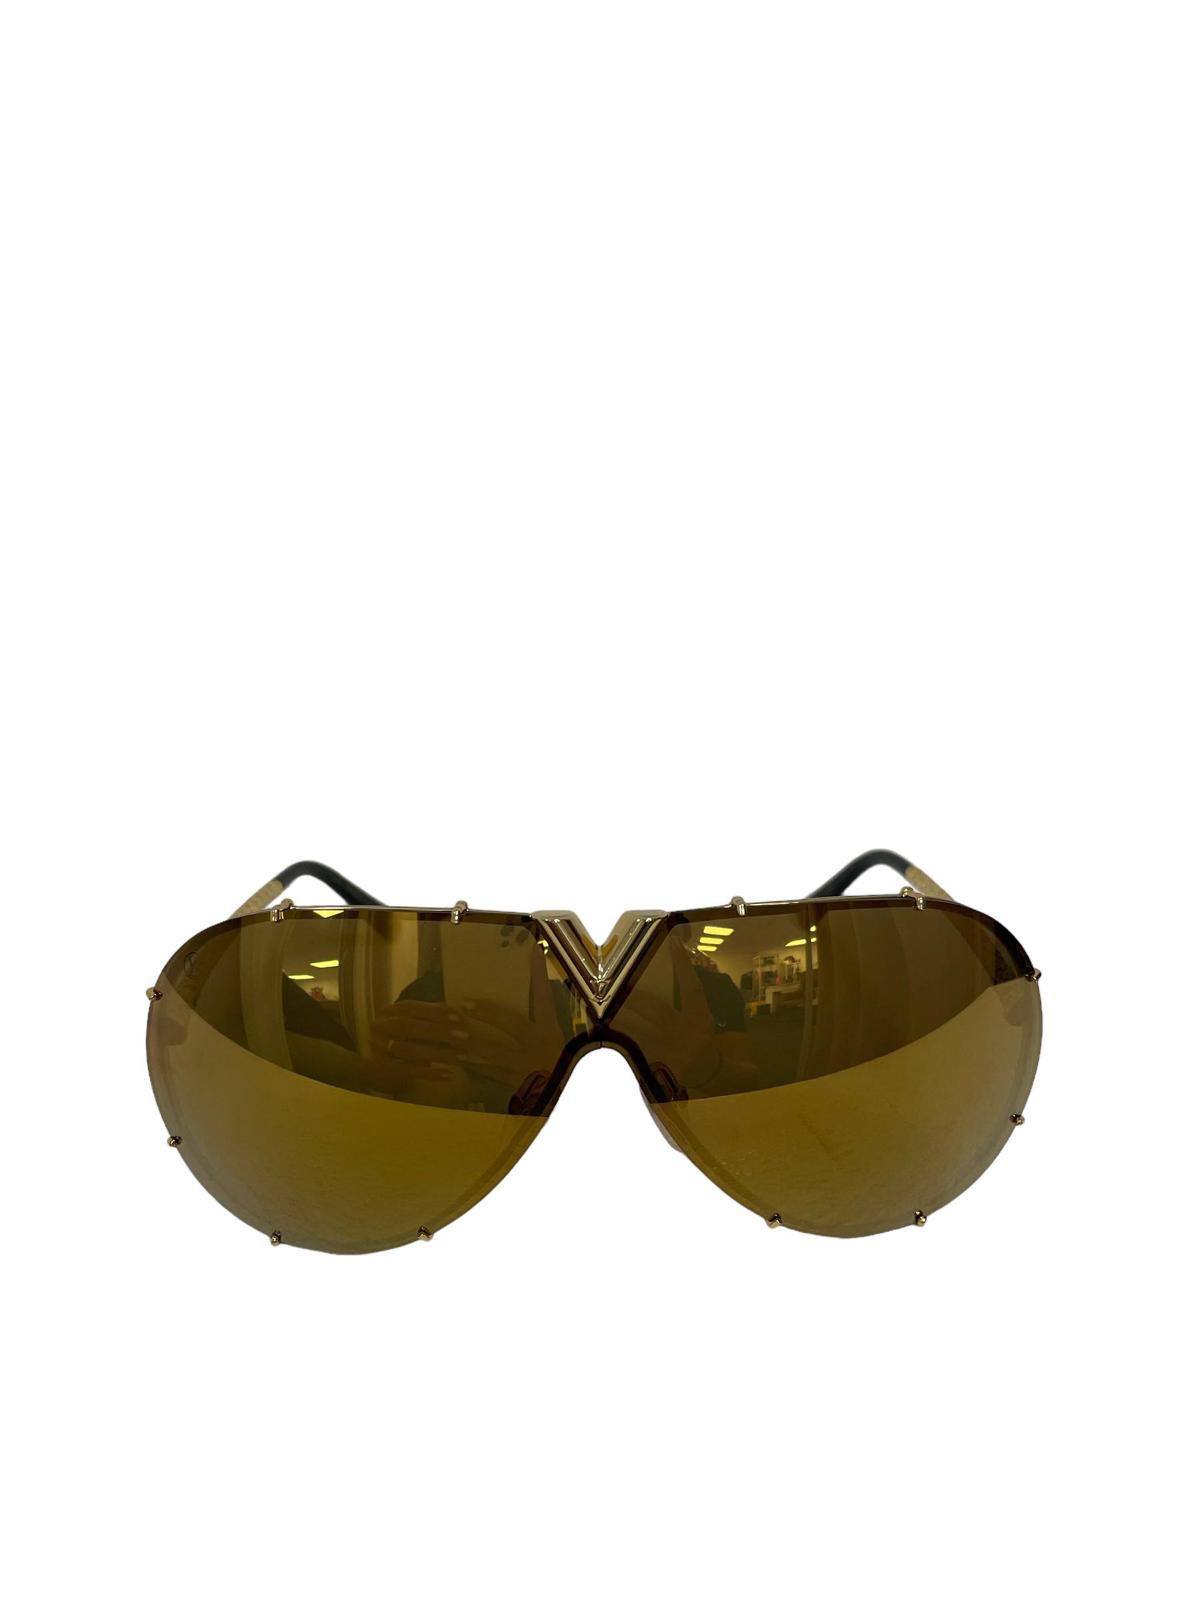 Limited edition Louis Vuitton sunglasses RTP £650